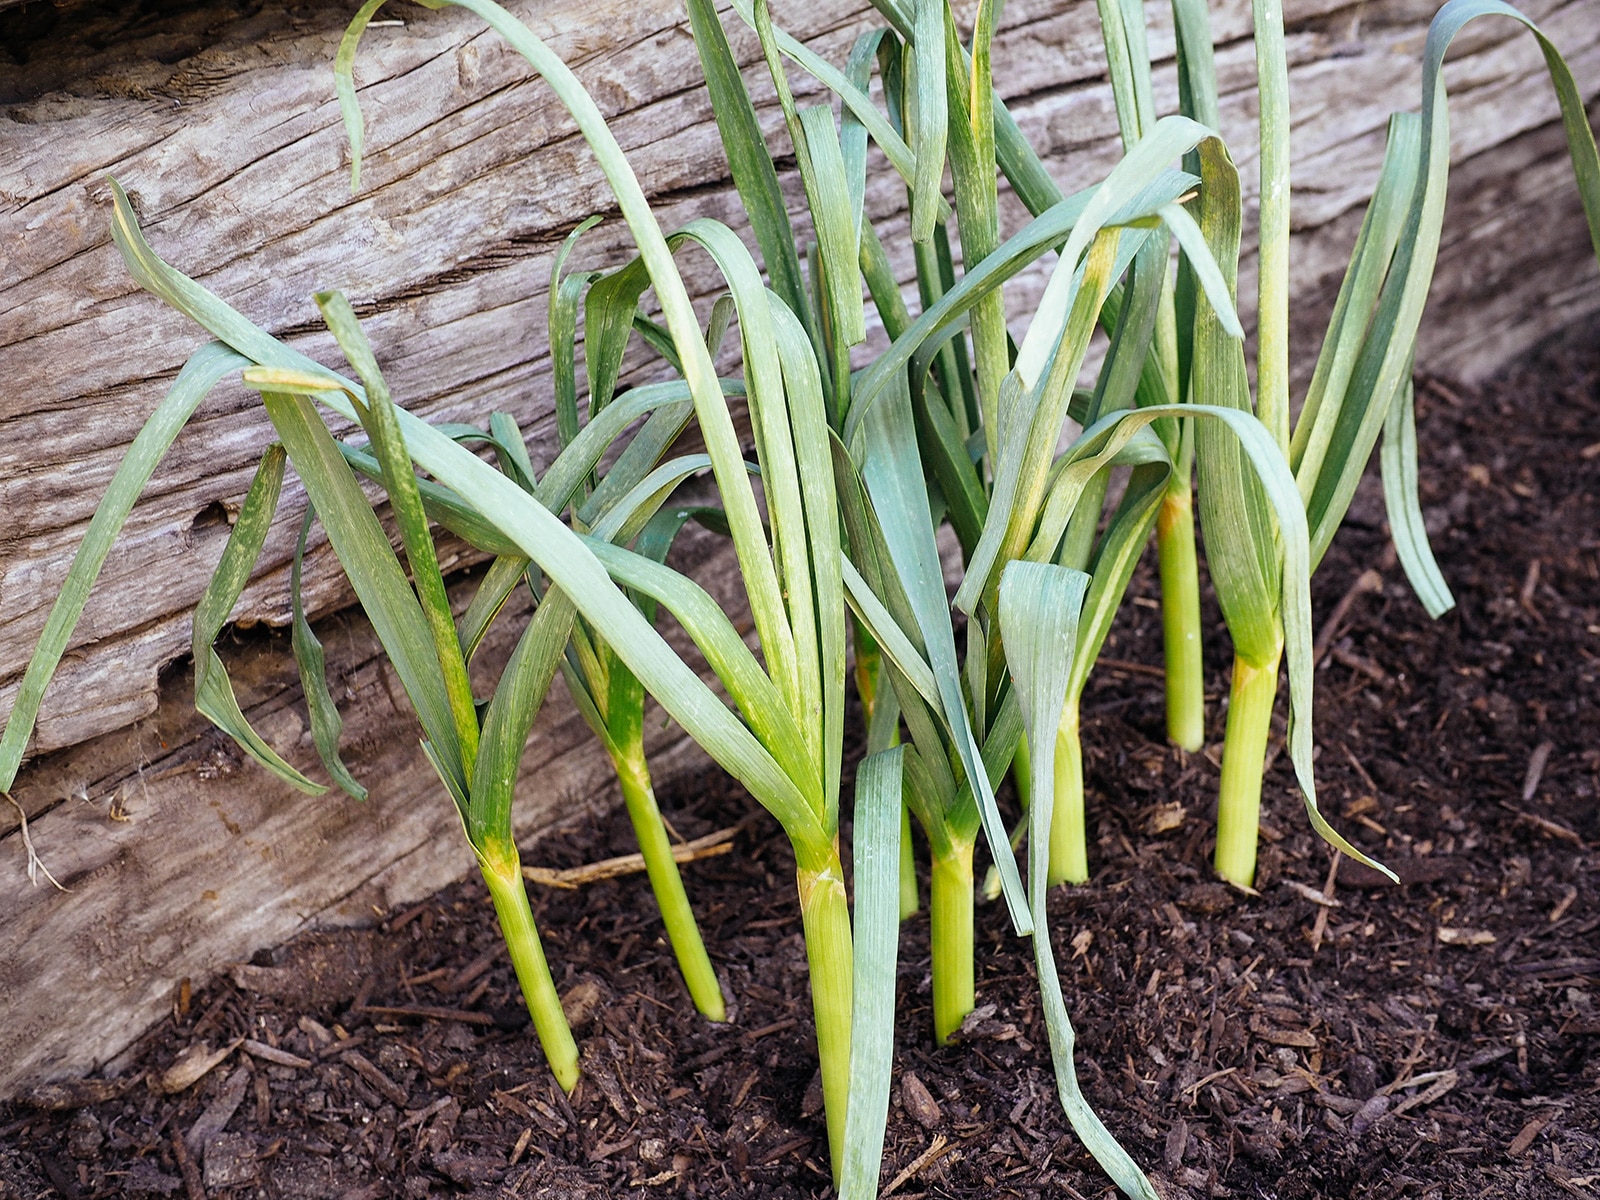 A bed of green garlic planted in a spring garden